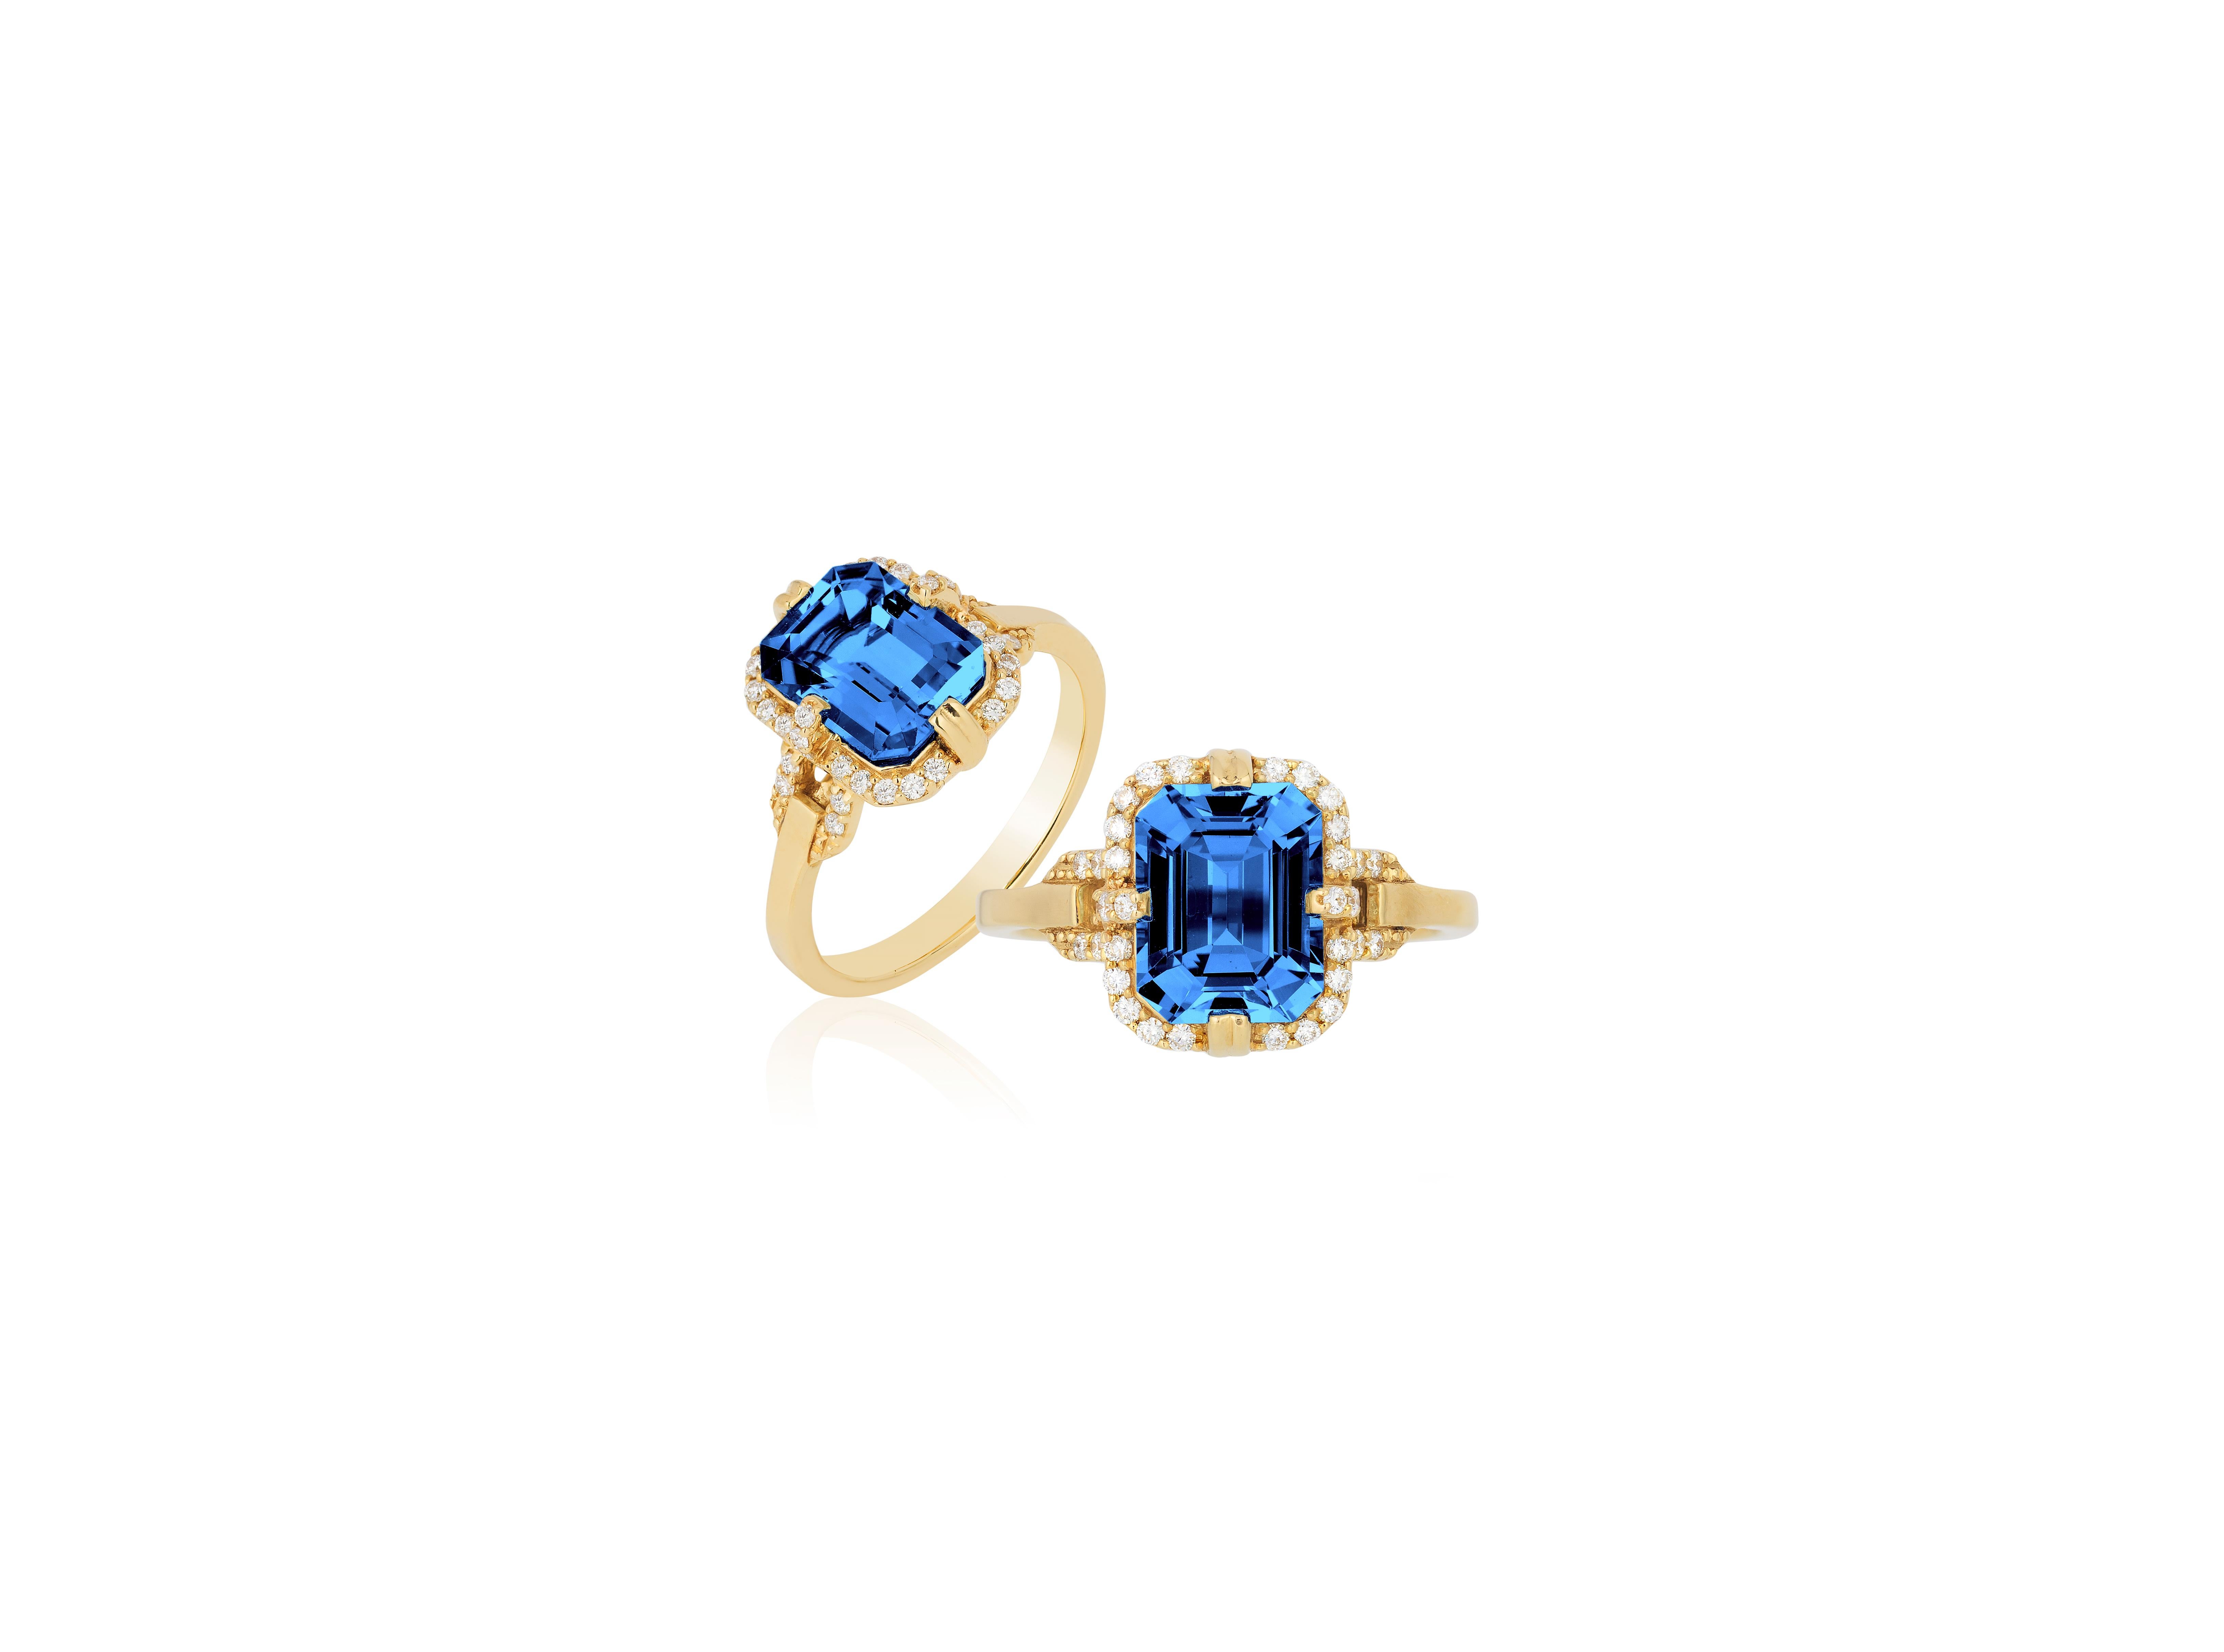 Contemporary London Blue Topaz Emerald Cut Ring with Diamonds